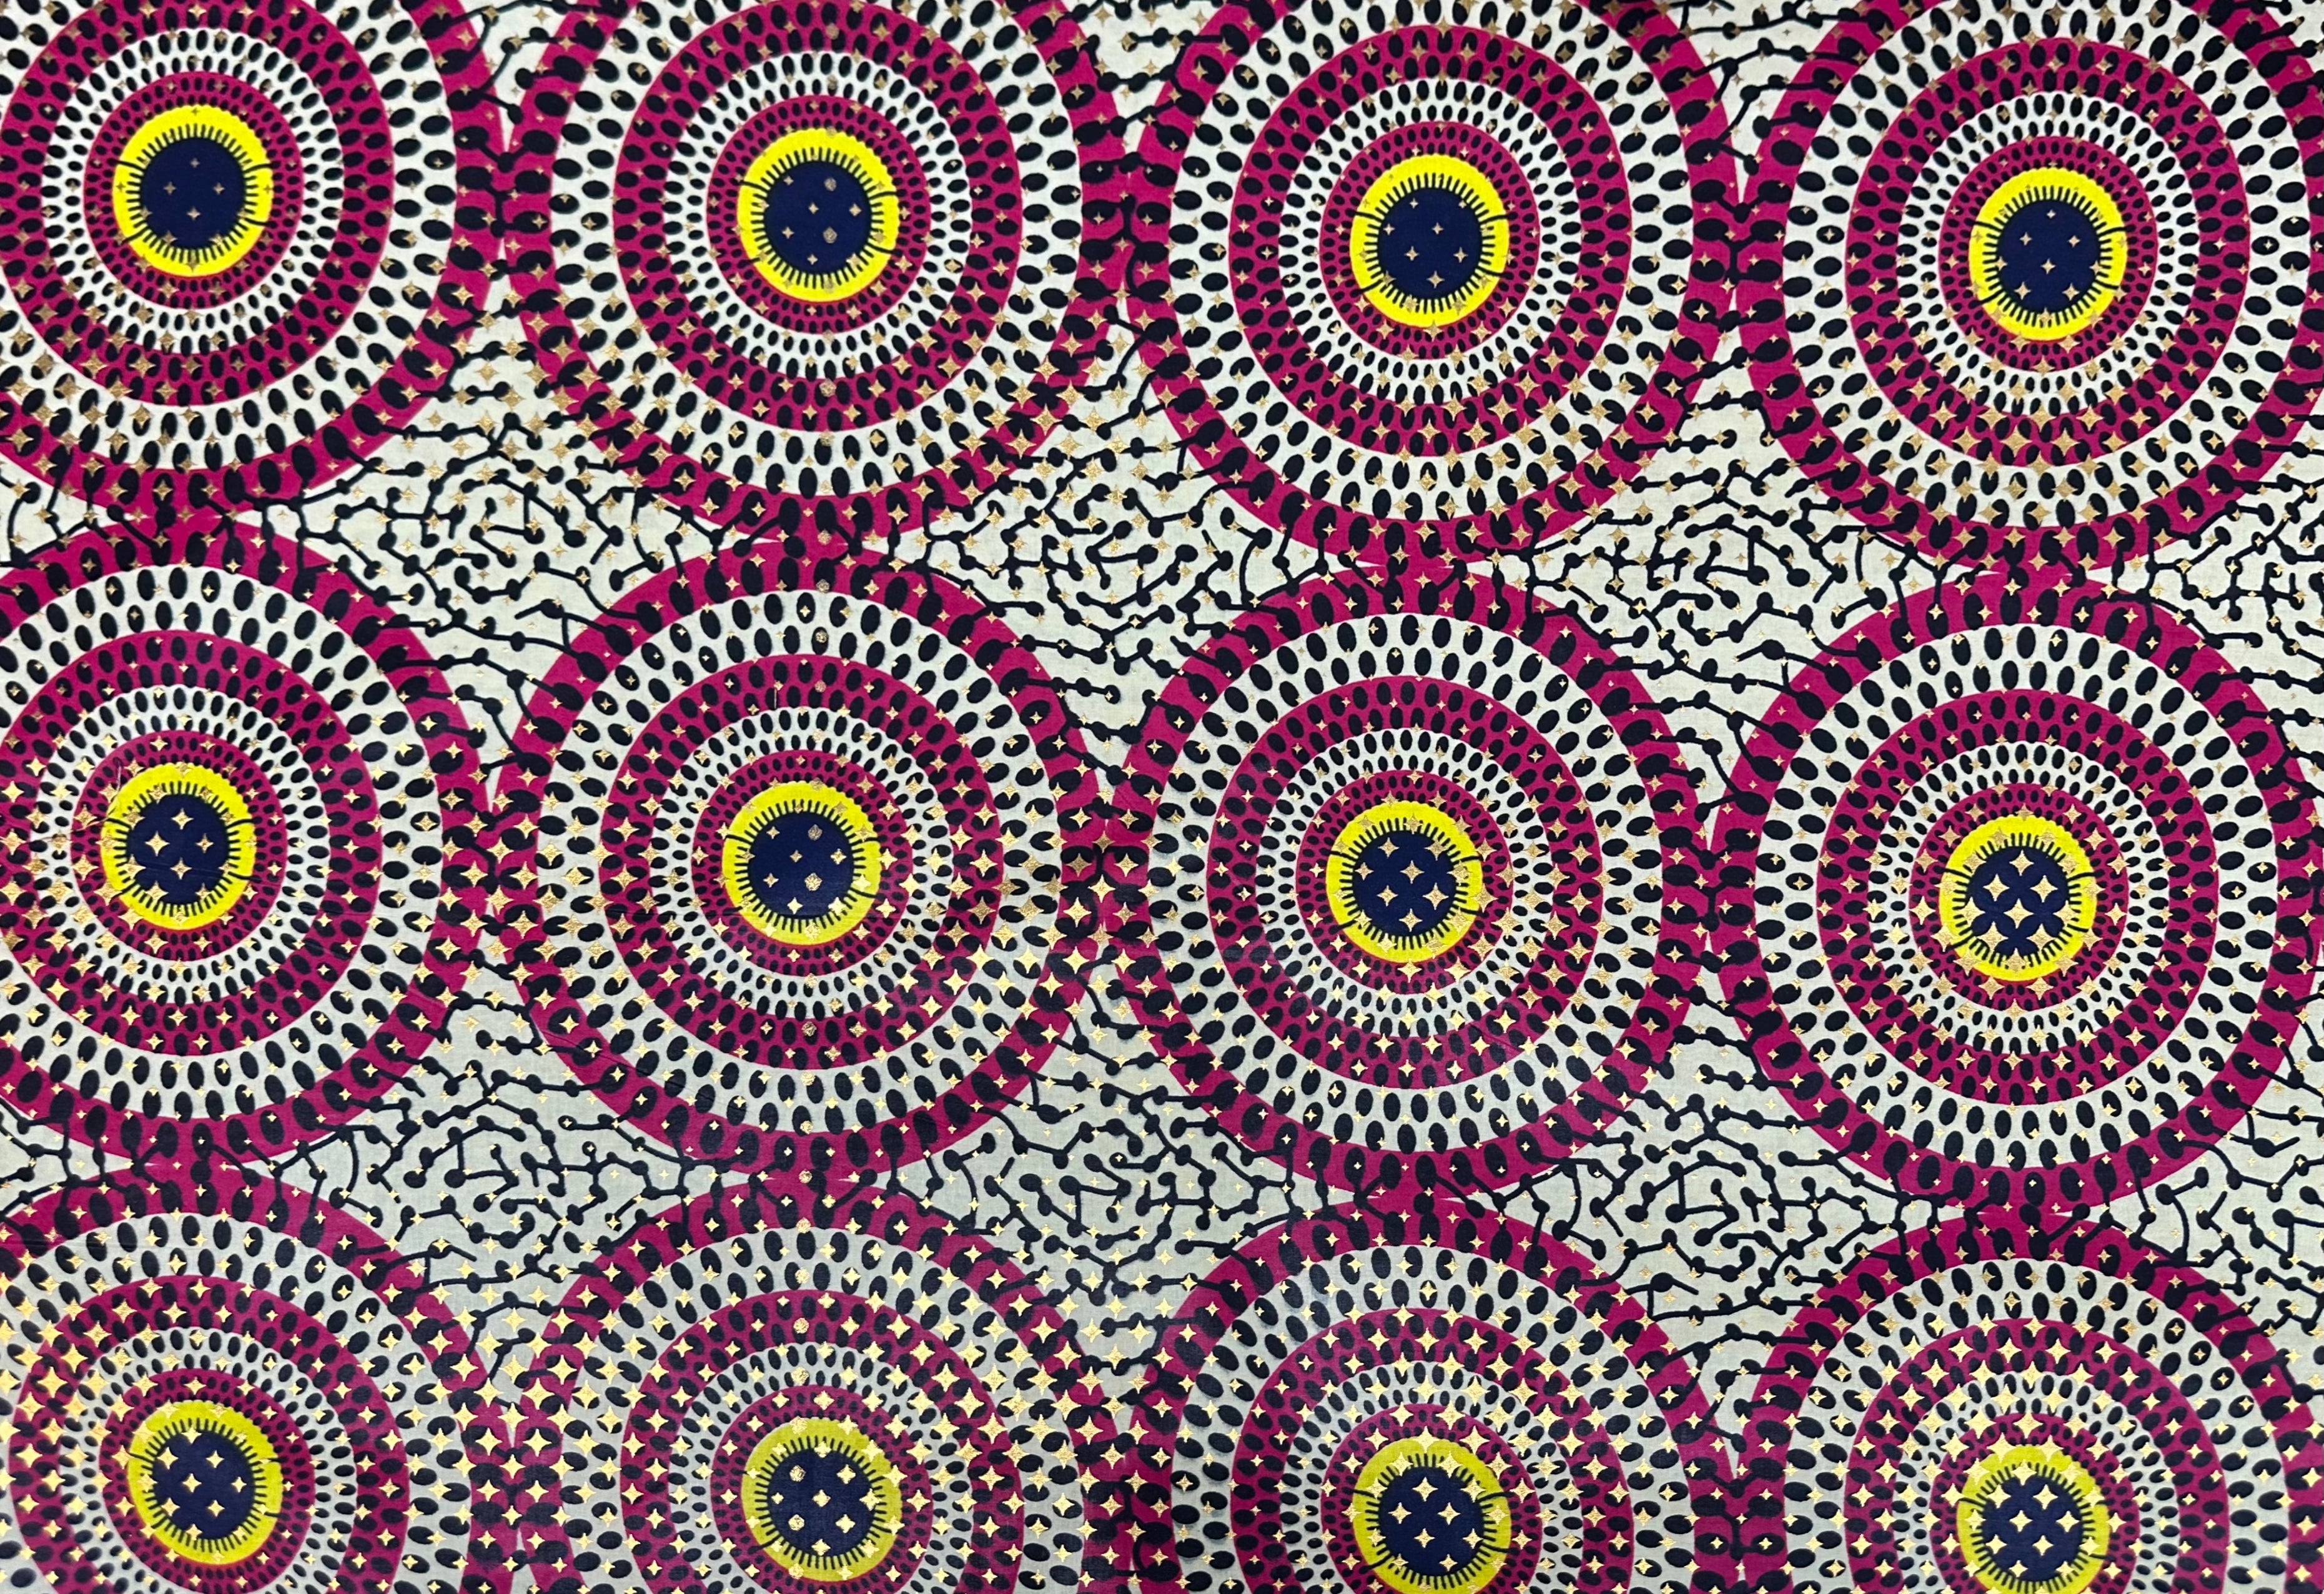 Waxed African Printed Cotton - Circles - Metallic Gold/Yellow/Pink